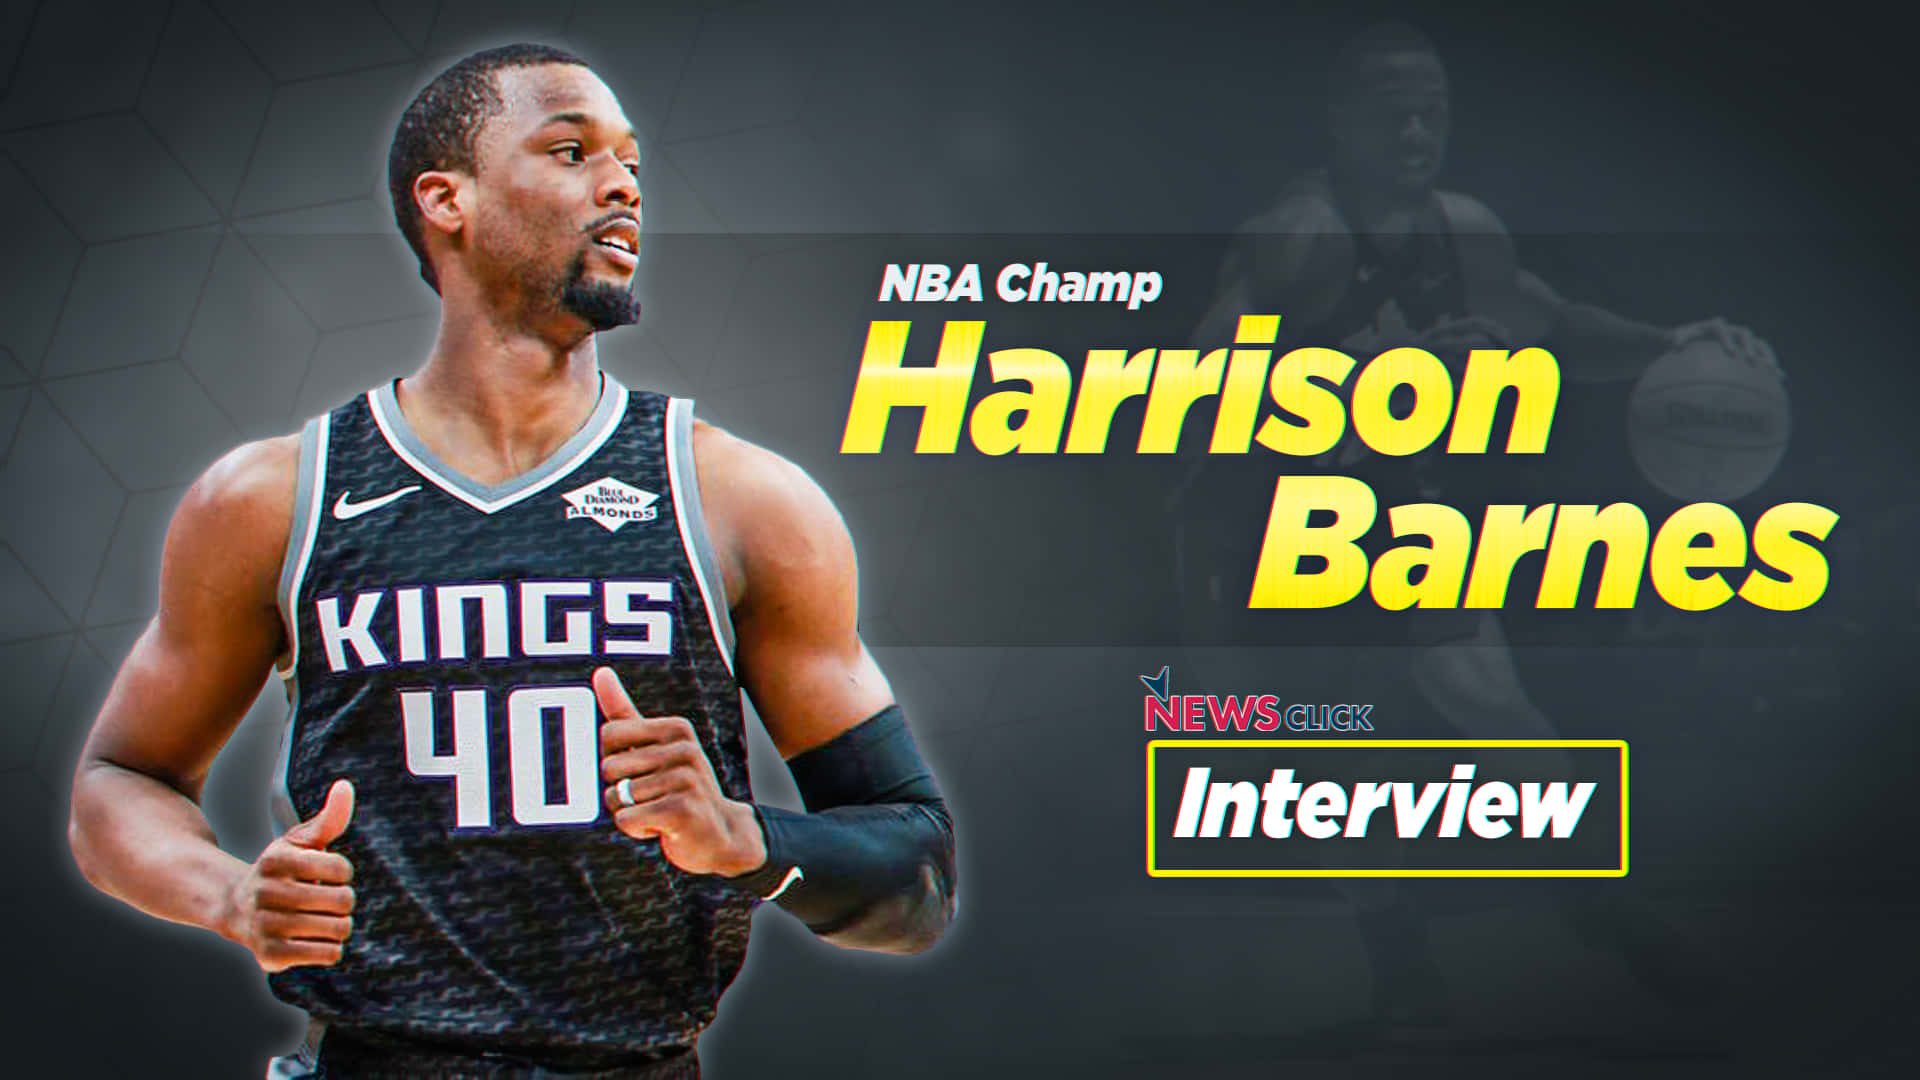 Harrison Barnes News Click Interview Wallpaper